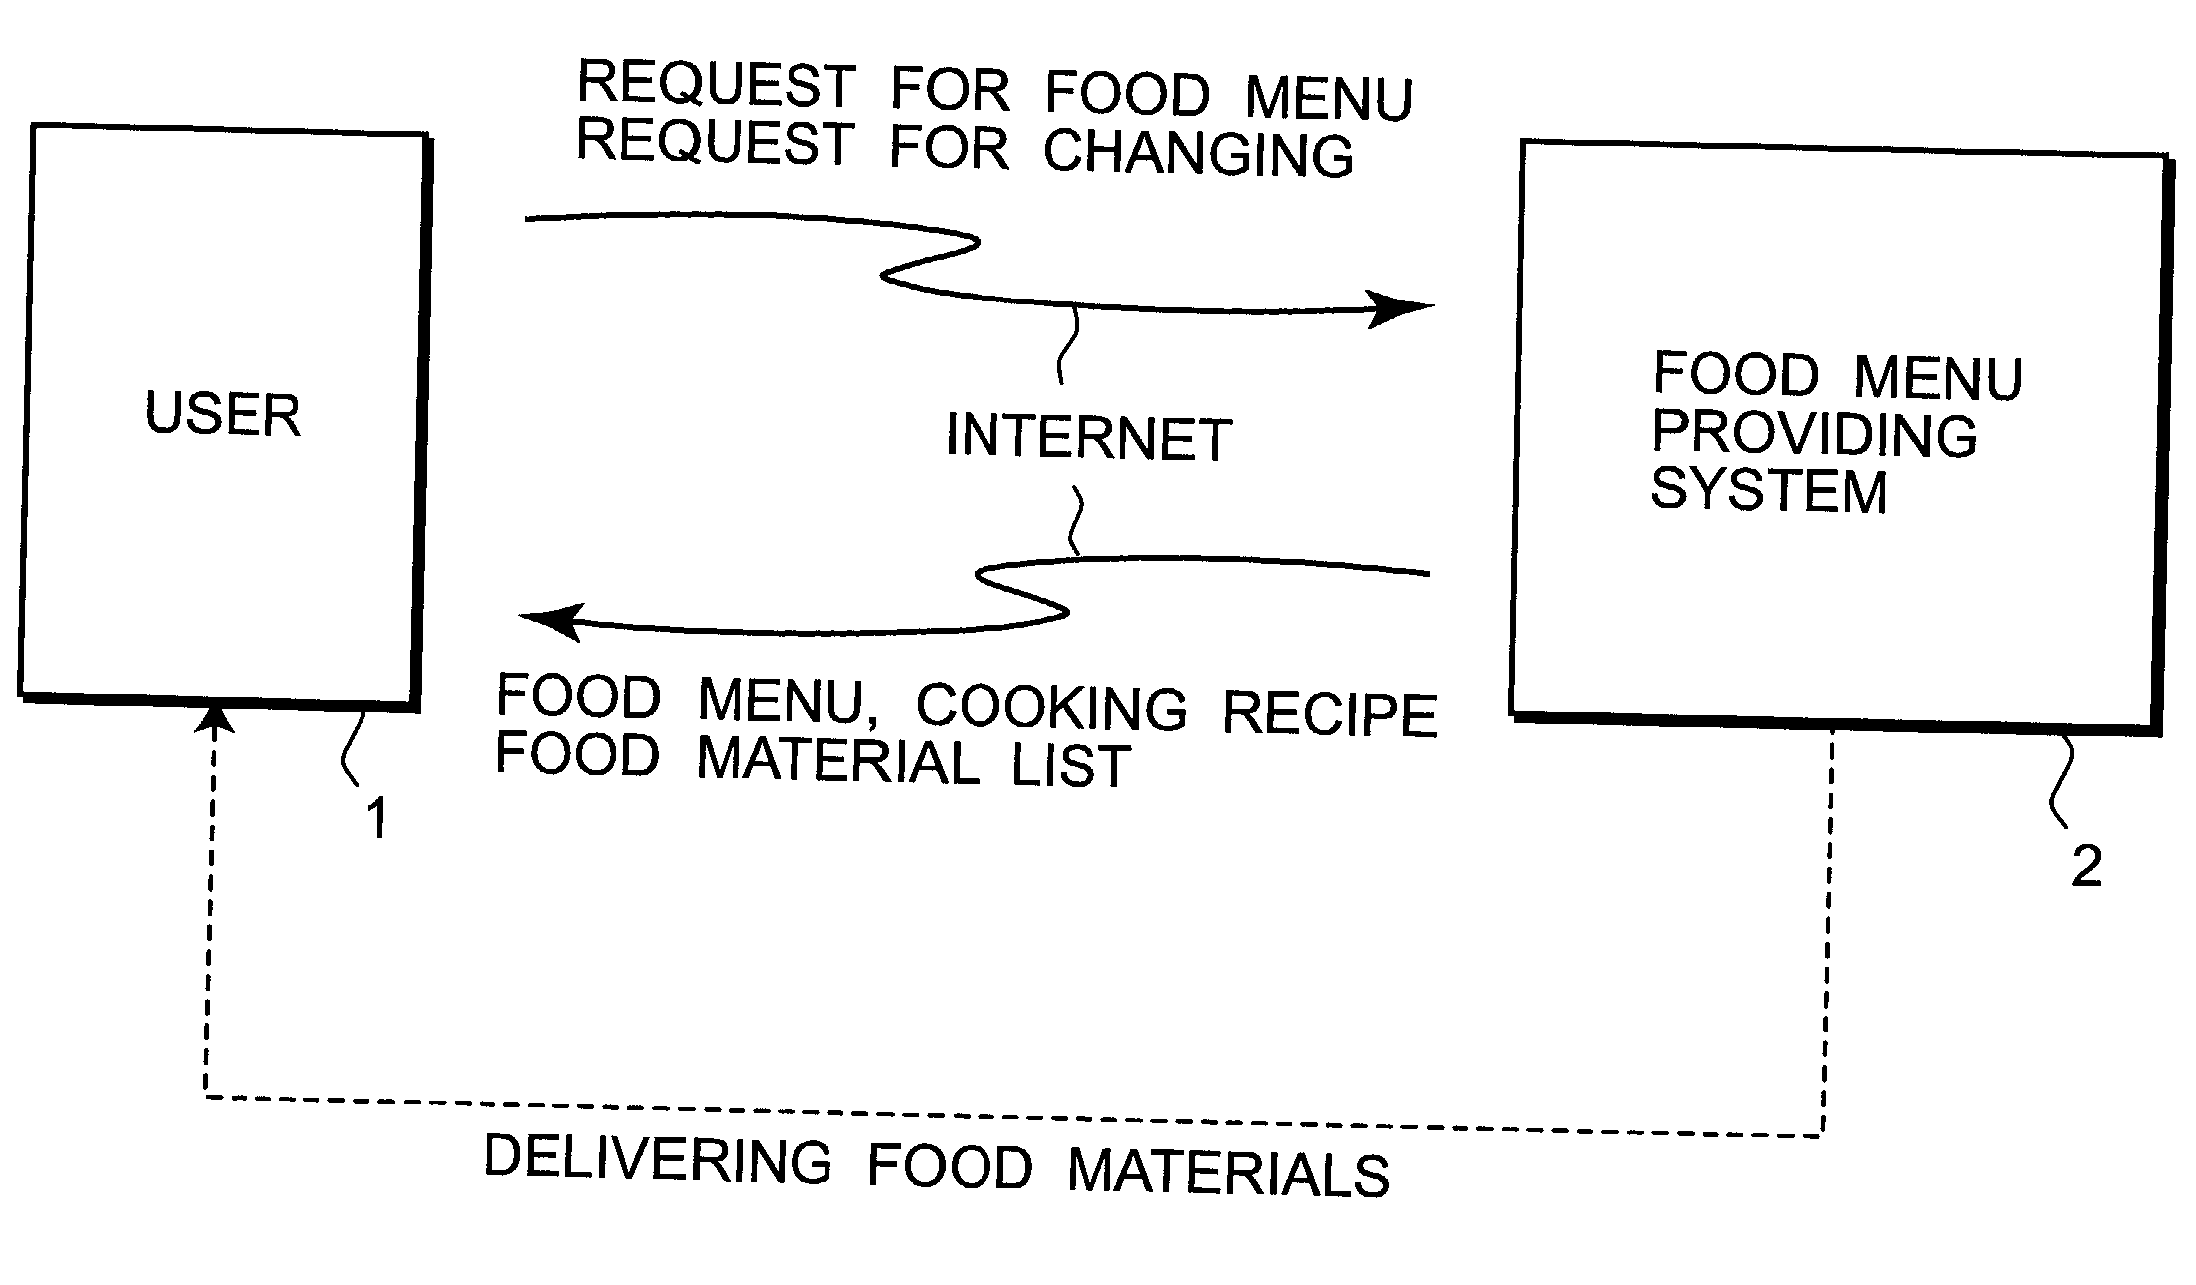 Food menu providing system